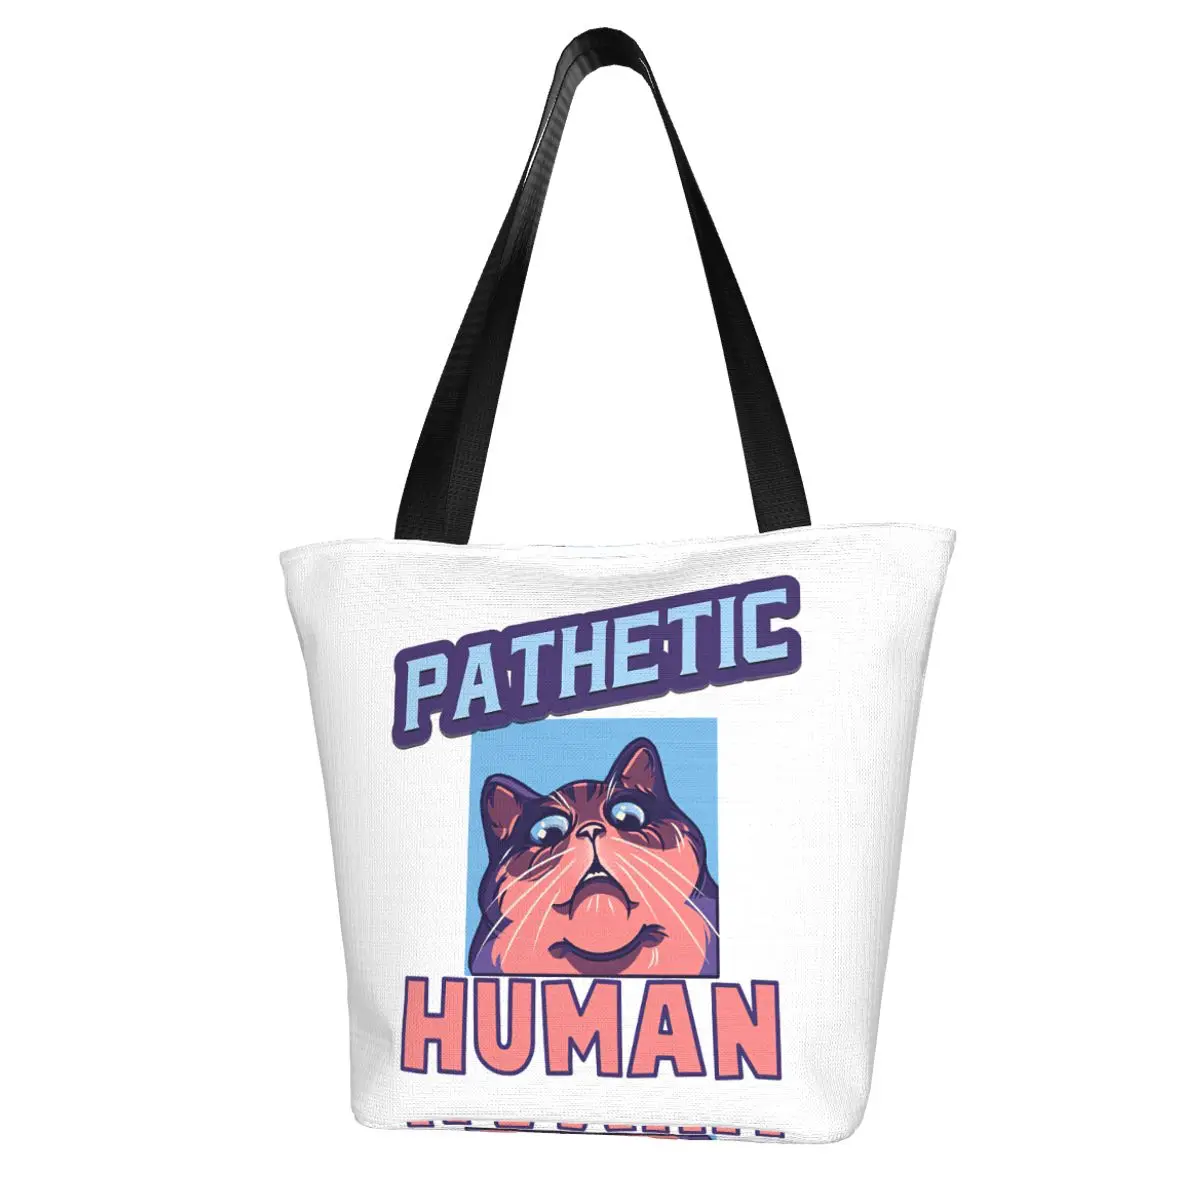 Pathetic Human Funny Cat Shopping Bag Aesthetic Cloth Outdoor Handbag Female Fashion Bags